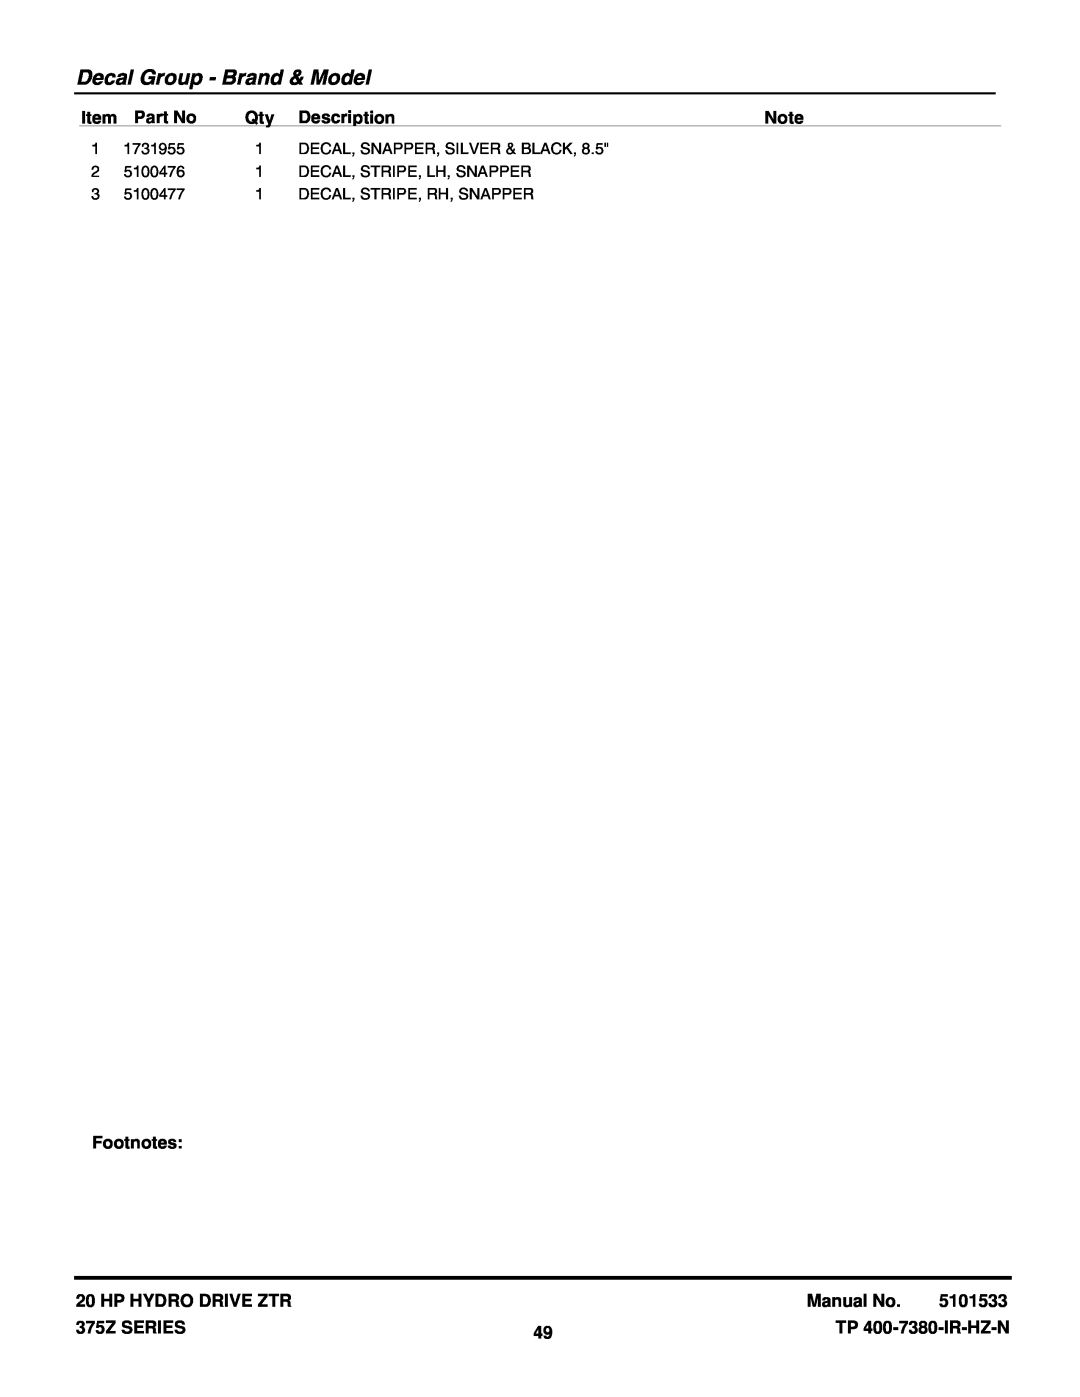 Snapper 375Z manual Decal Group - Brand & Model, Item 